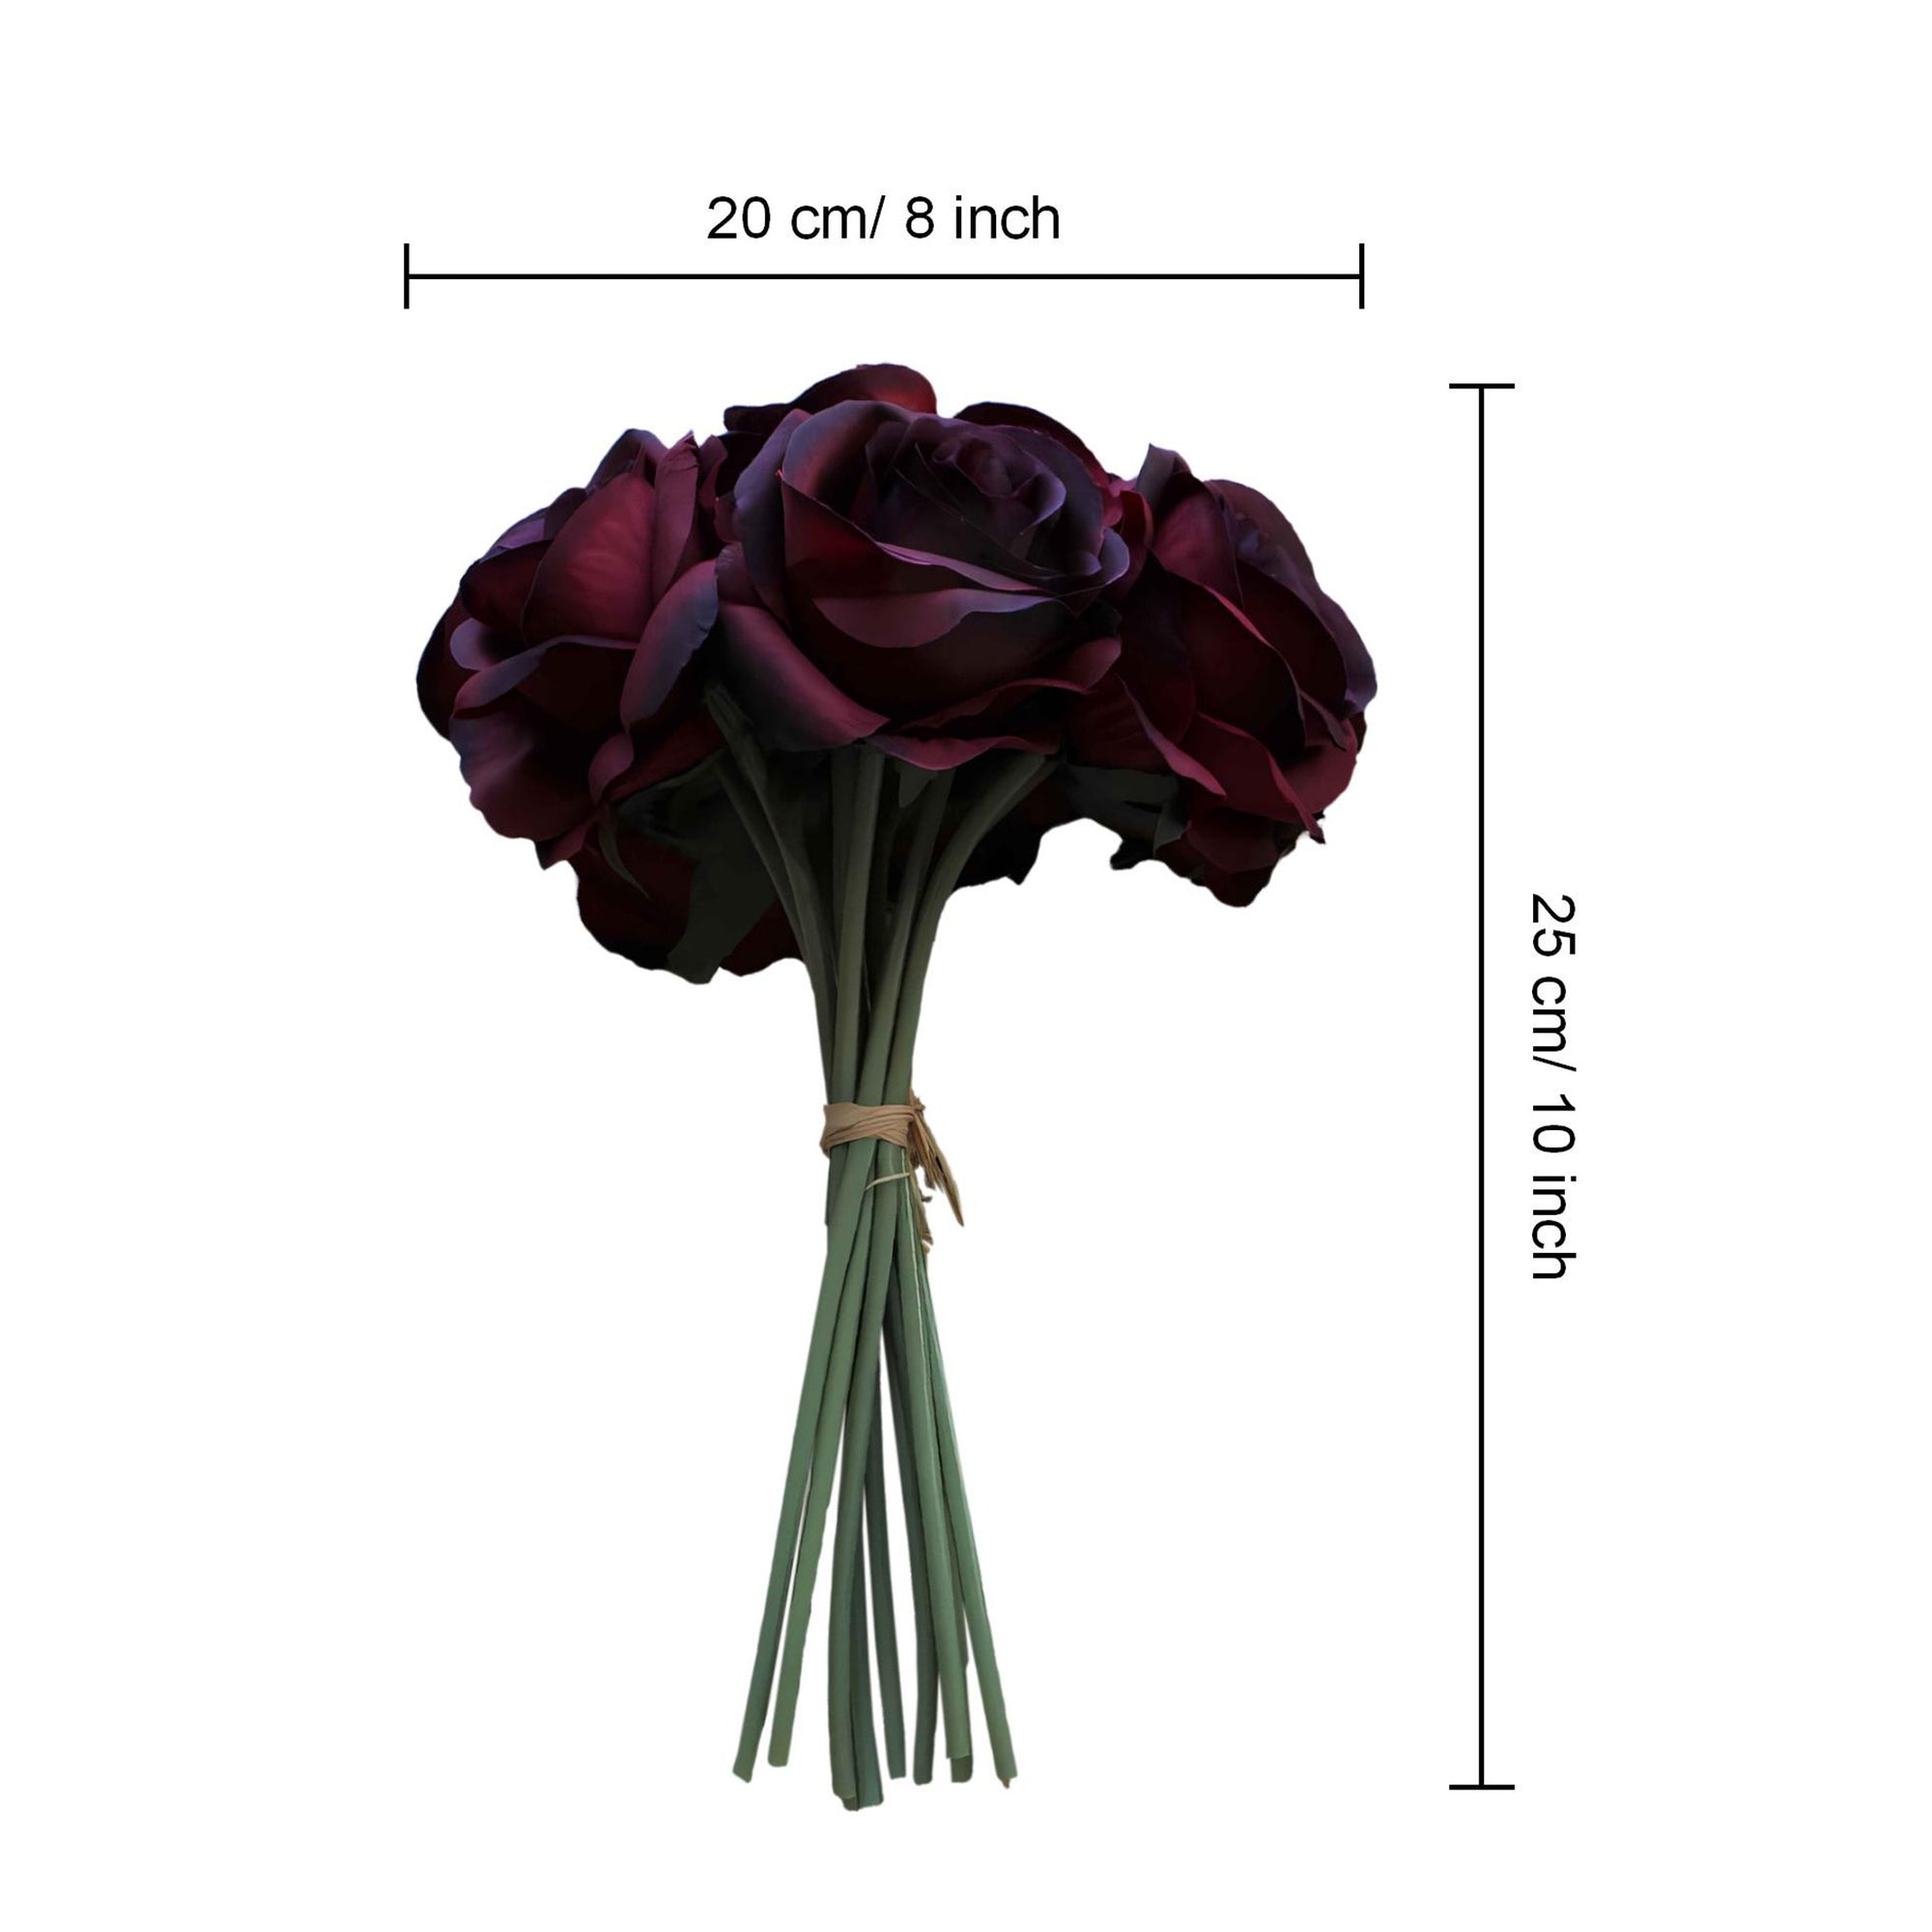 Burgundy Rose Bouquet Artificial Wedding Flowers for diy Centerpieces Decor